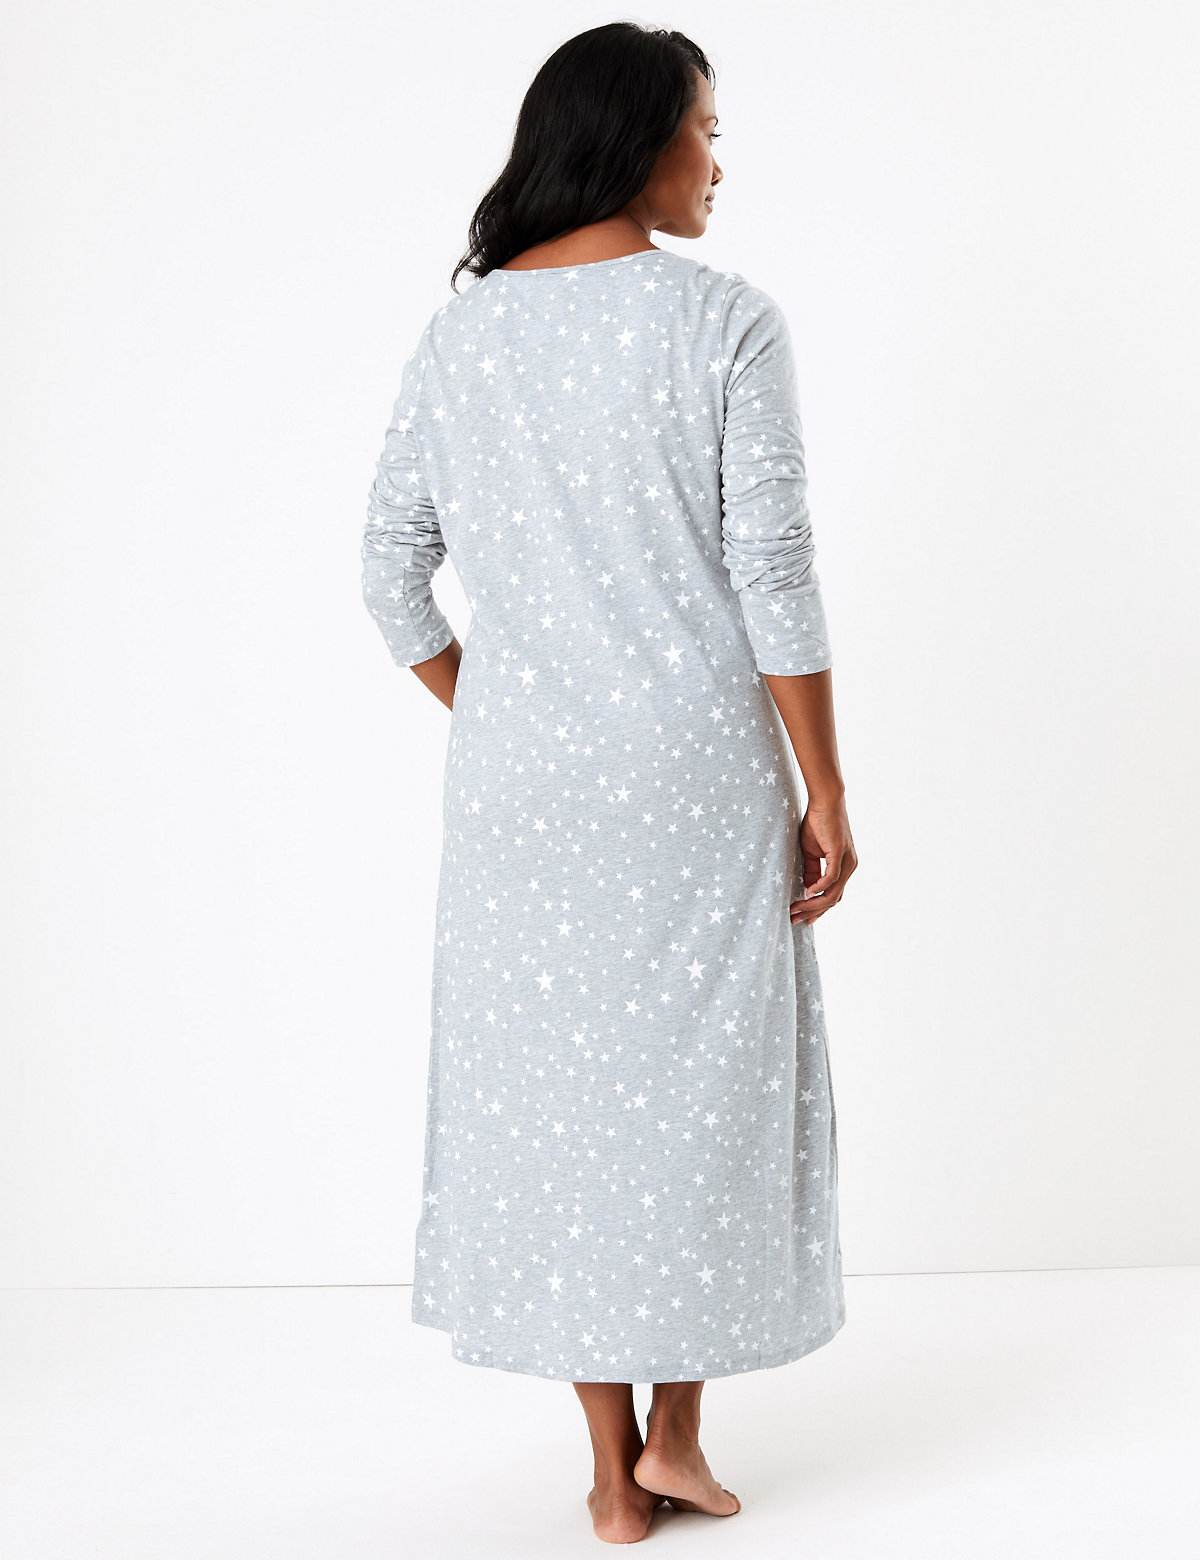 Cool Comfort™ Cotton Modal Star Print Nightdress